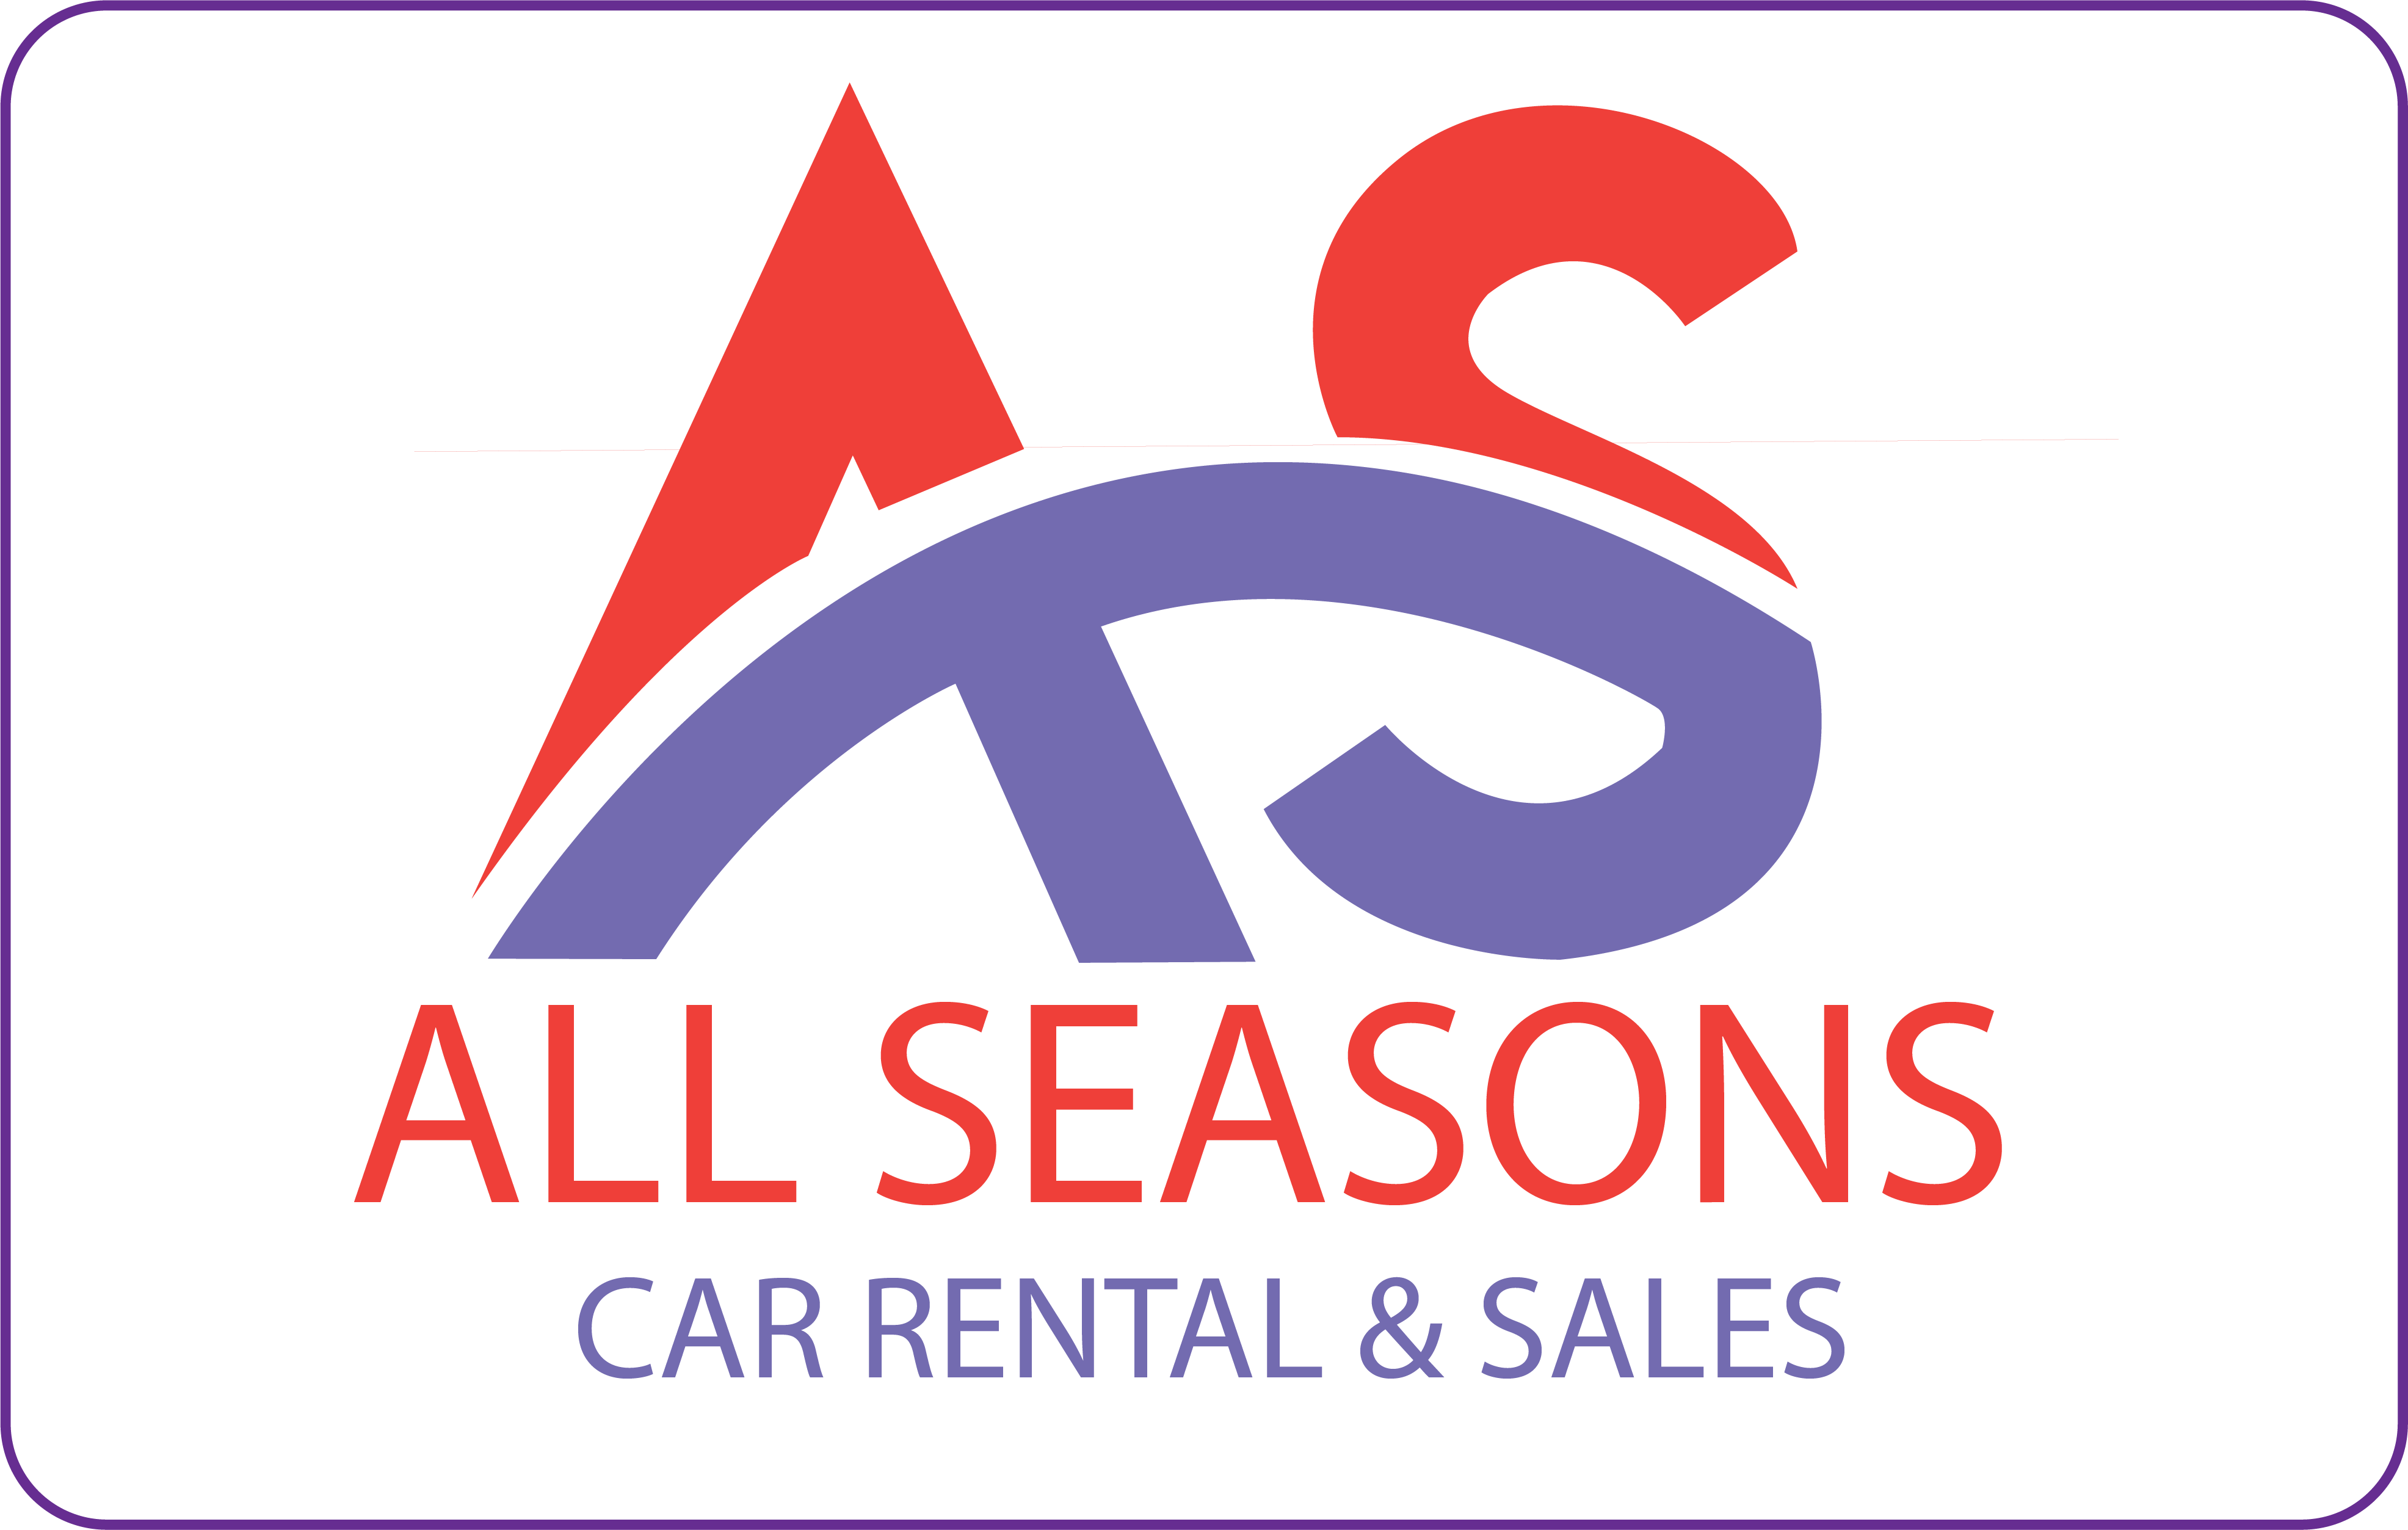 All Seasons Car Rental